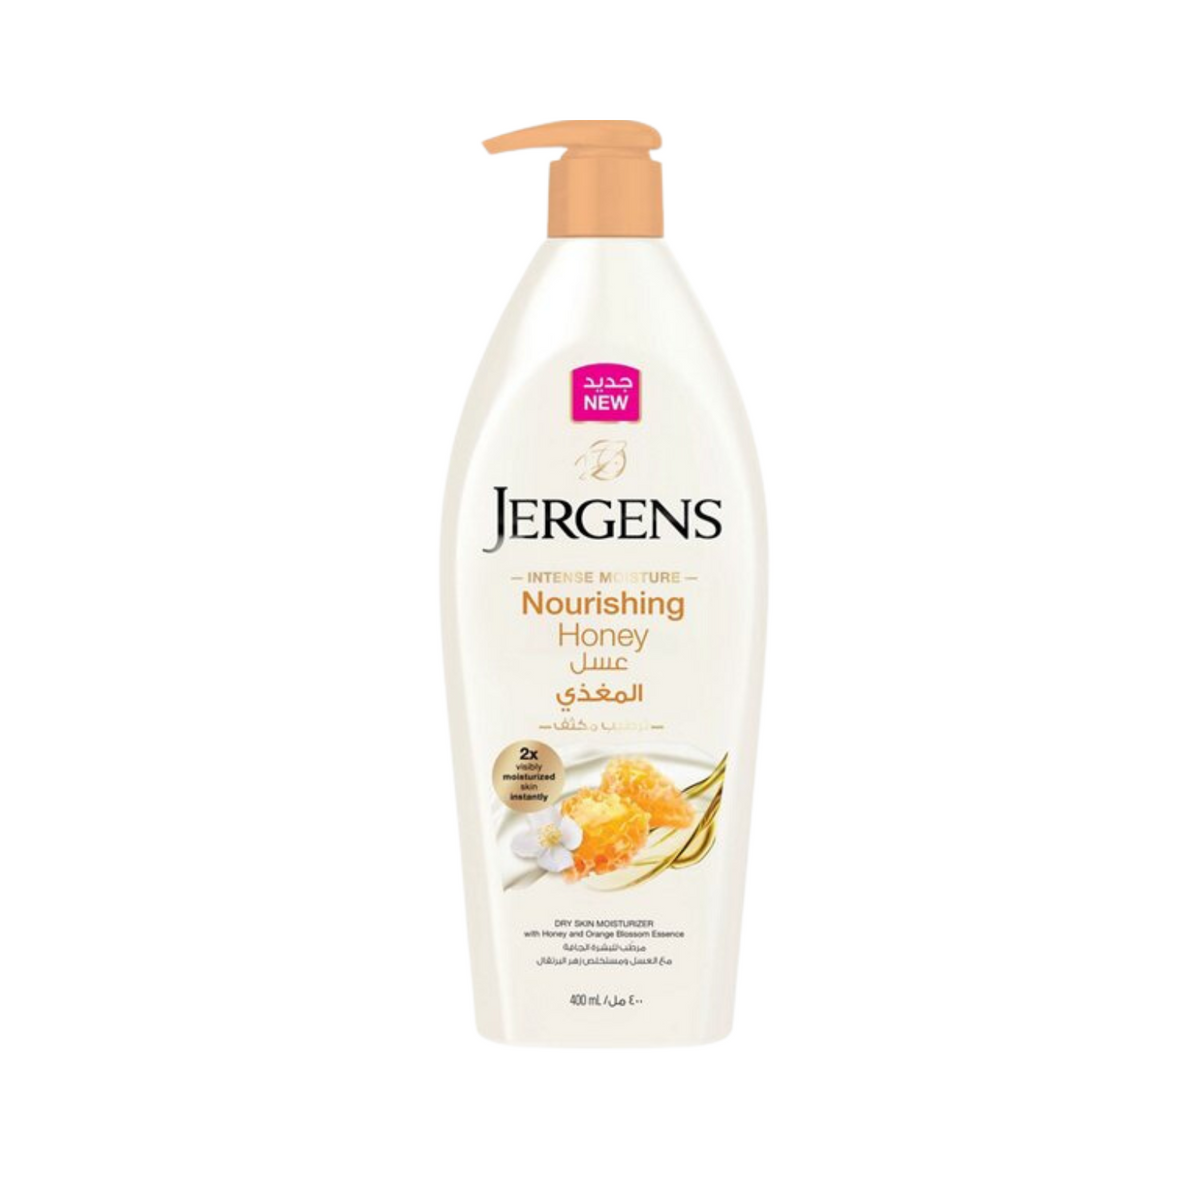 jergens-nourishing-honey-with-honey-and-orange-blossom-essence-400ml